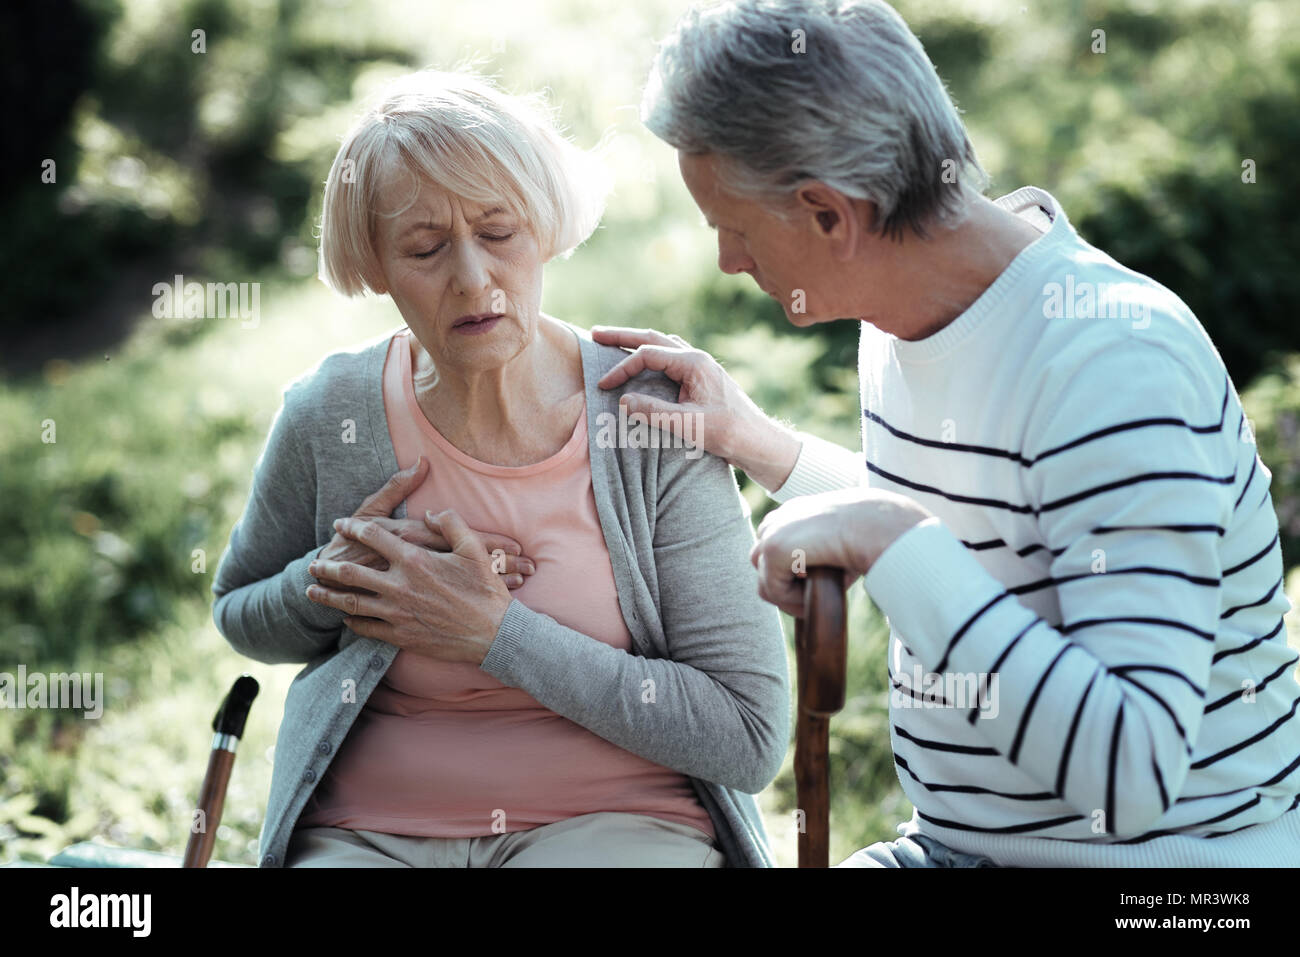 Elderly female person having pain Stock Photo